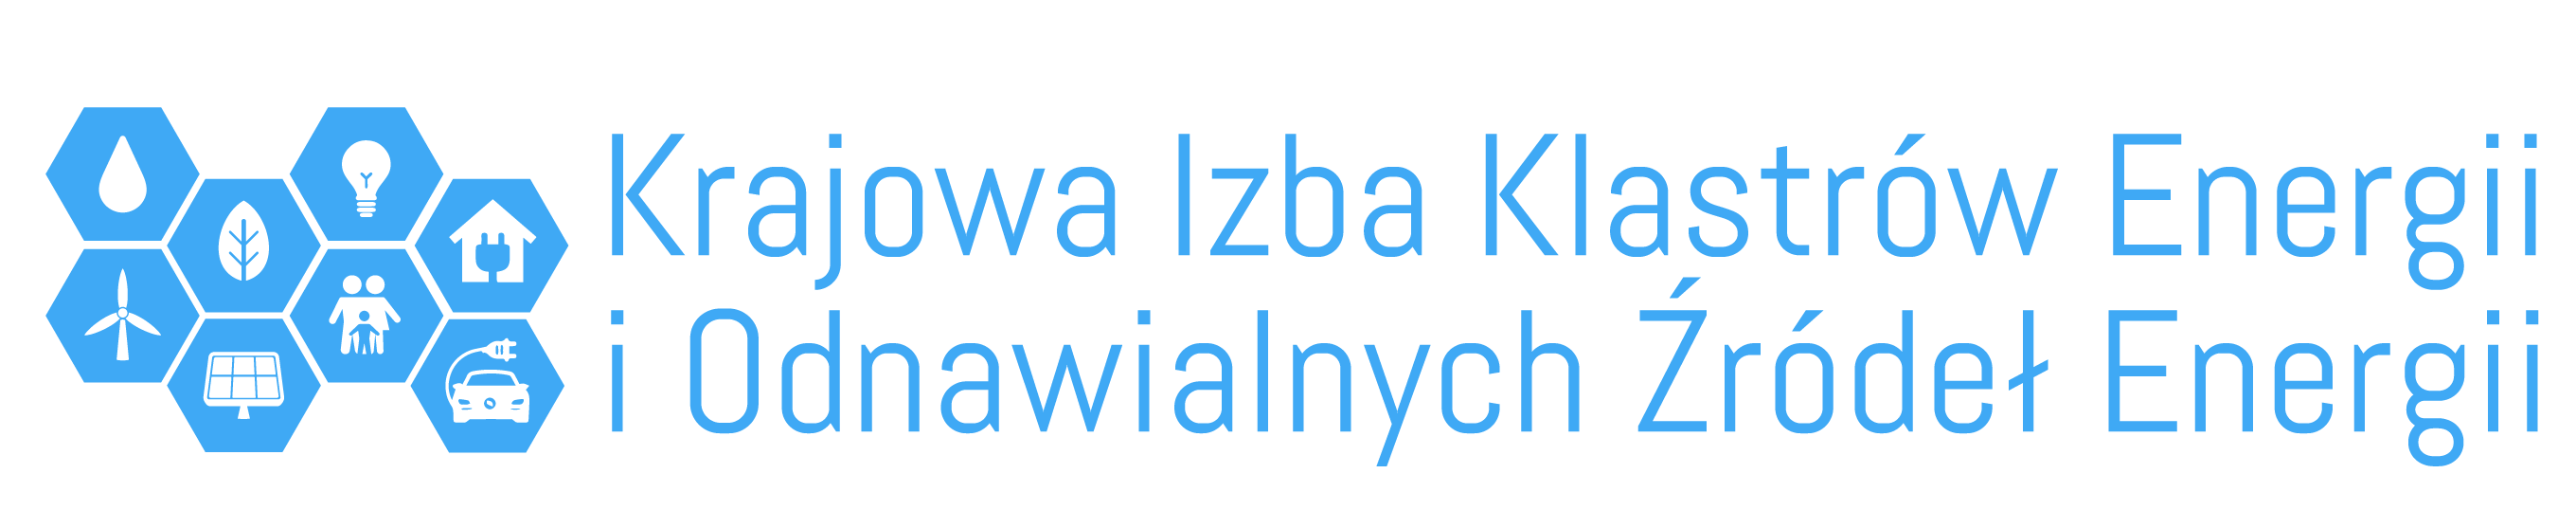 logo nowe i OZE